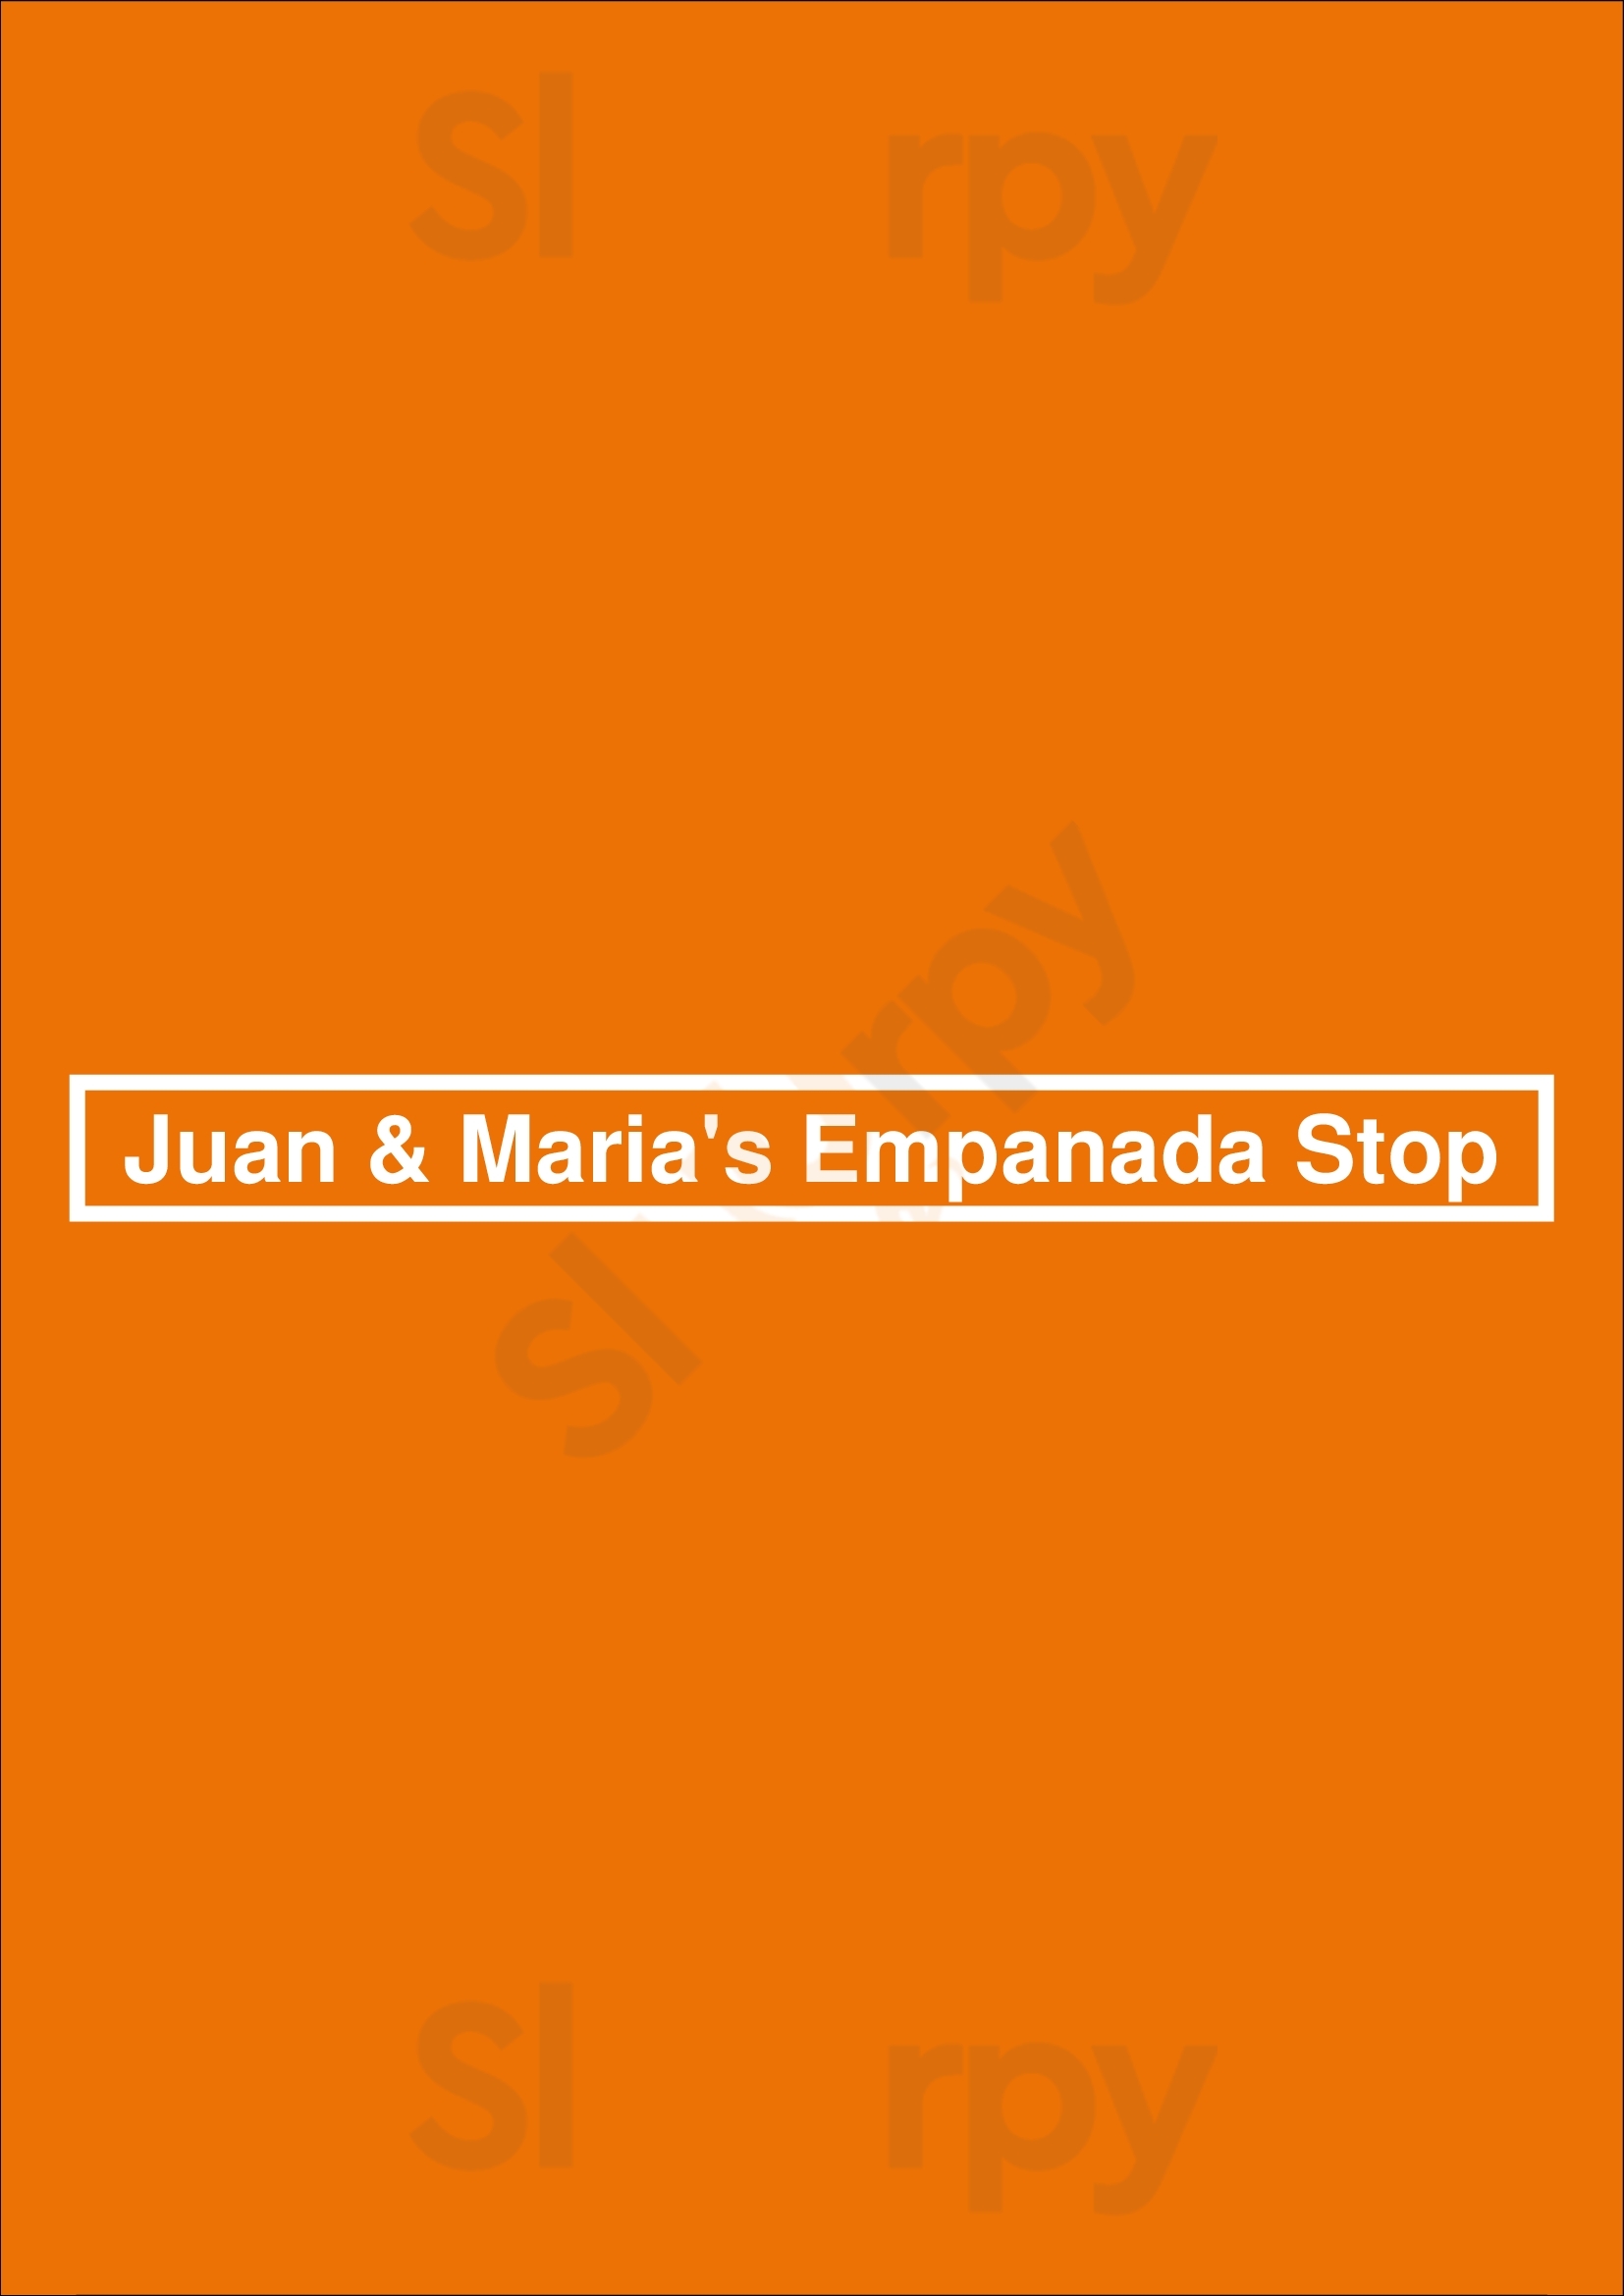 Juan & Maria's Empanada Stop Rochester Menu - 1